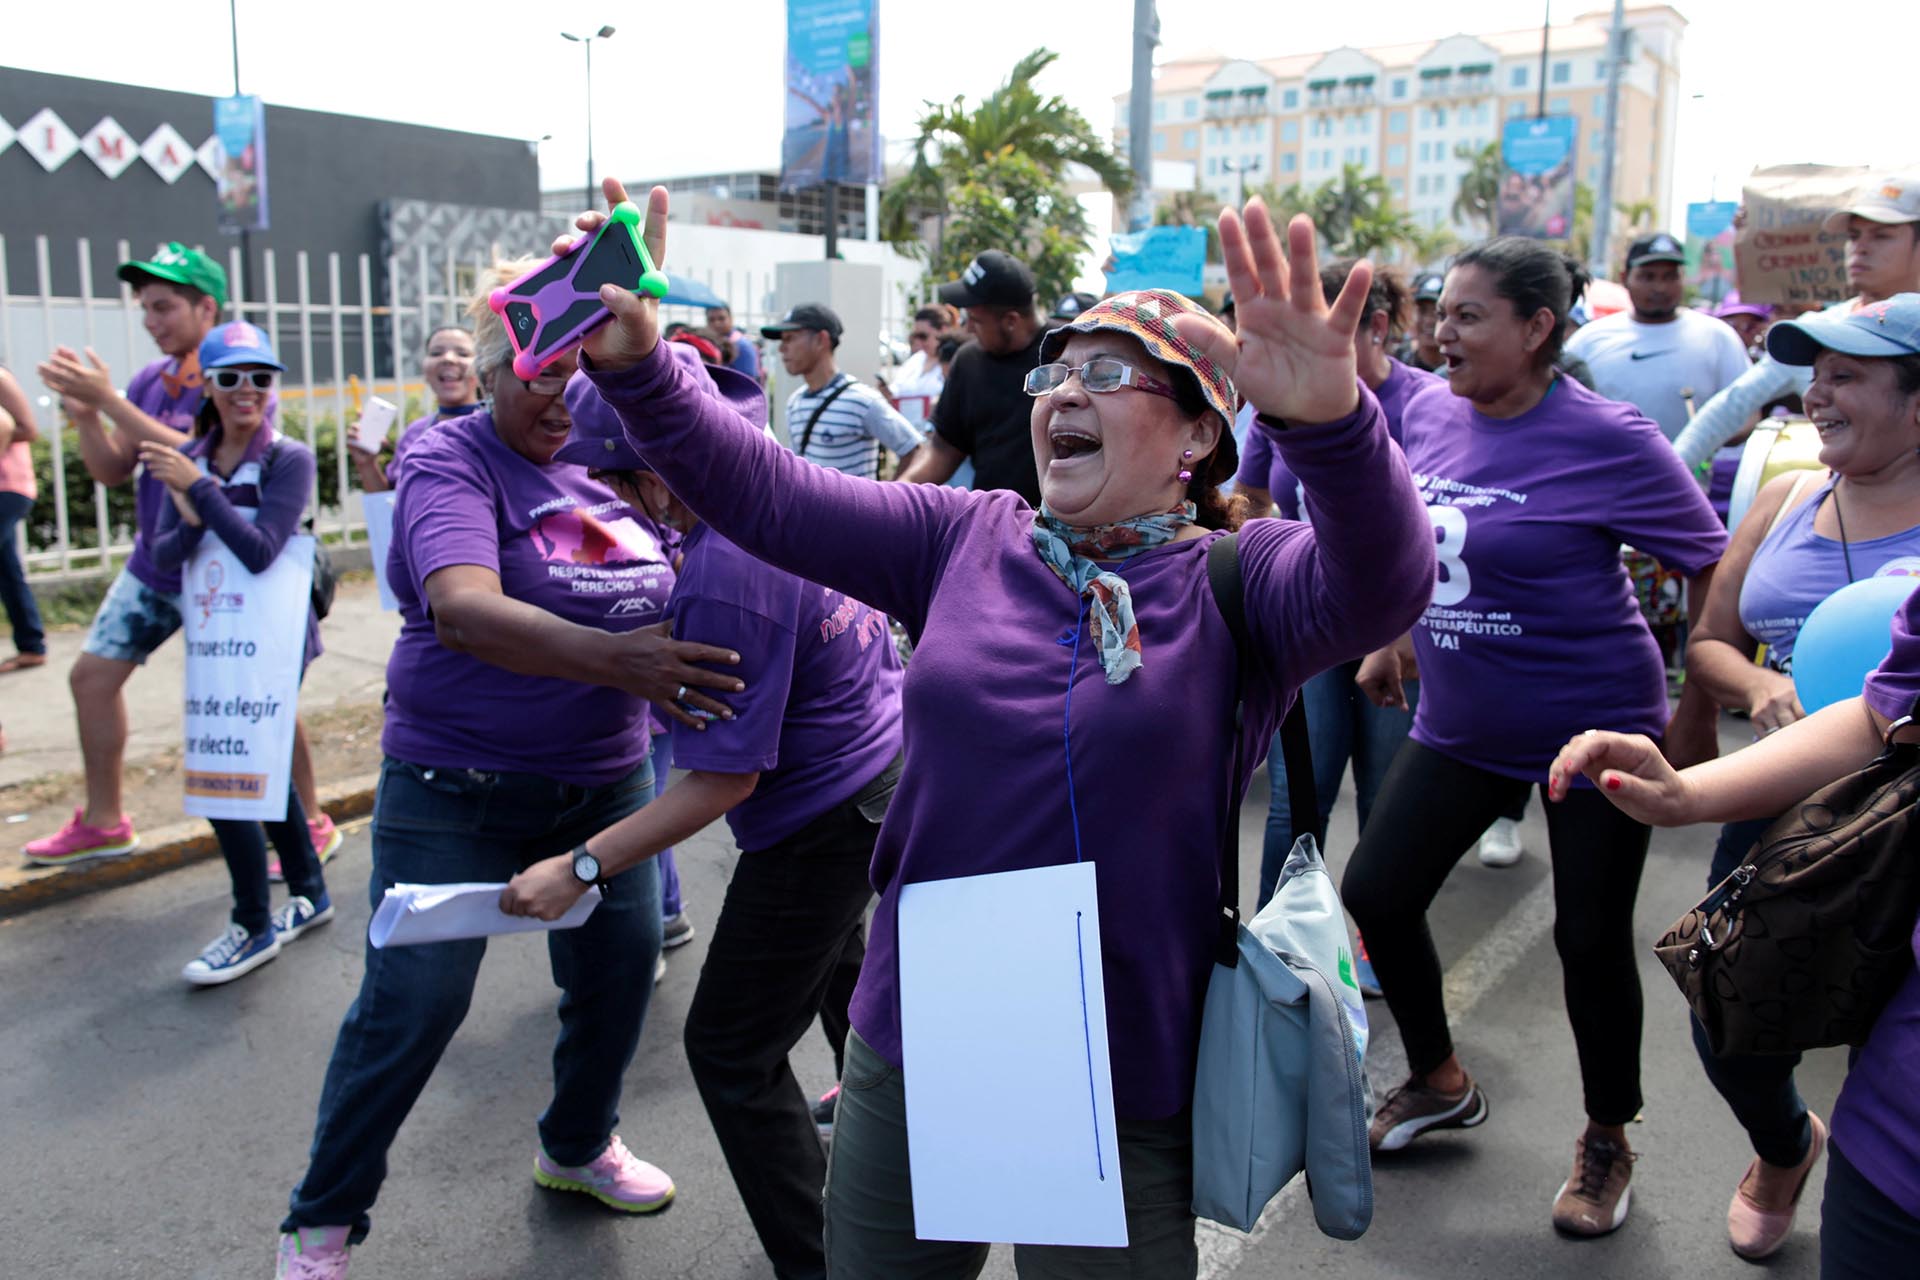 Women take part in a march to mark International Women's Day in Managua, Nicaragua March 8, 2017. REUTERS/Oswaldo Rivas